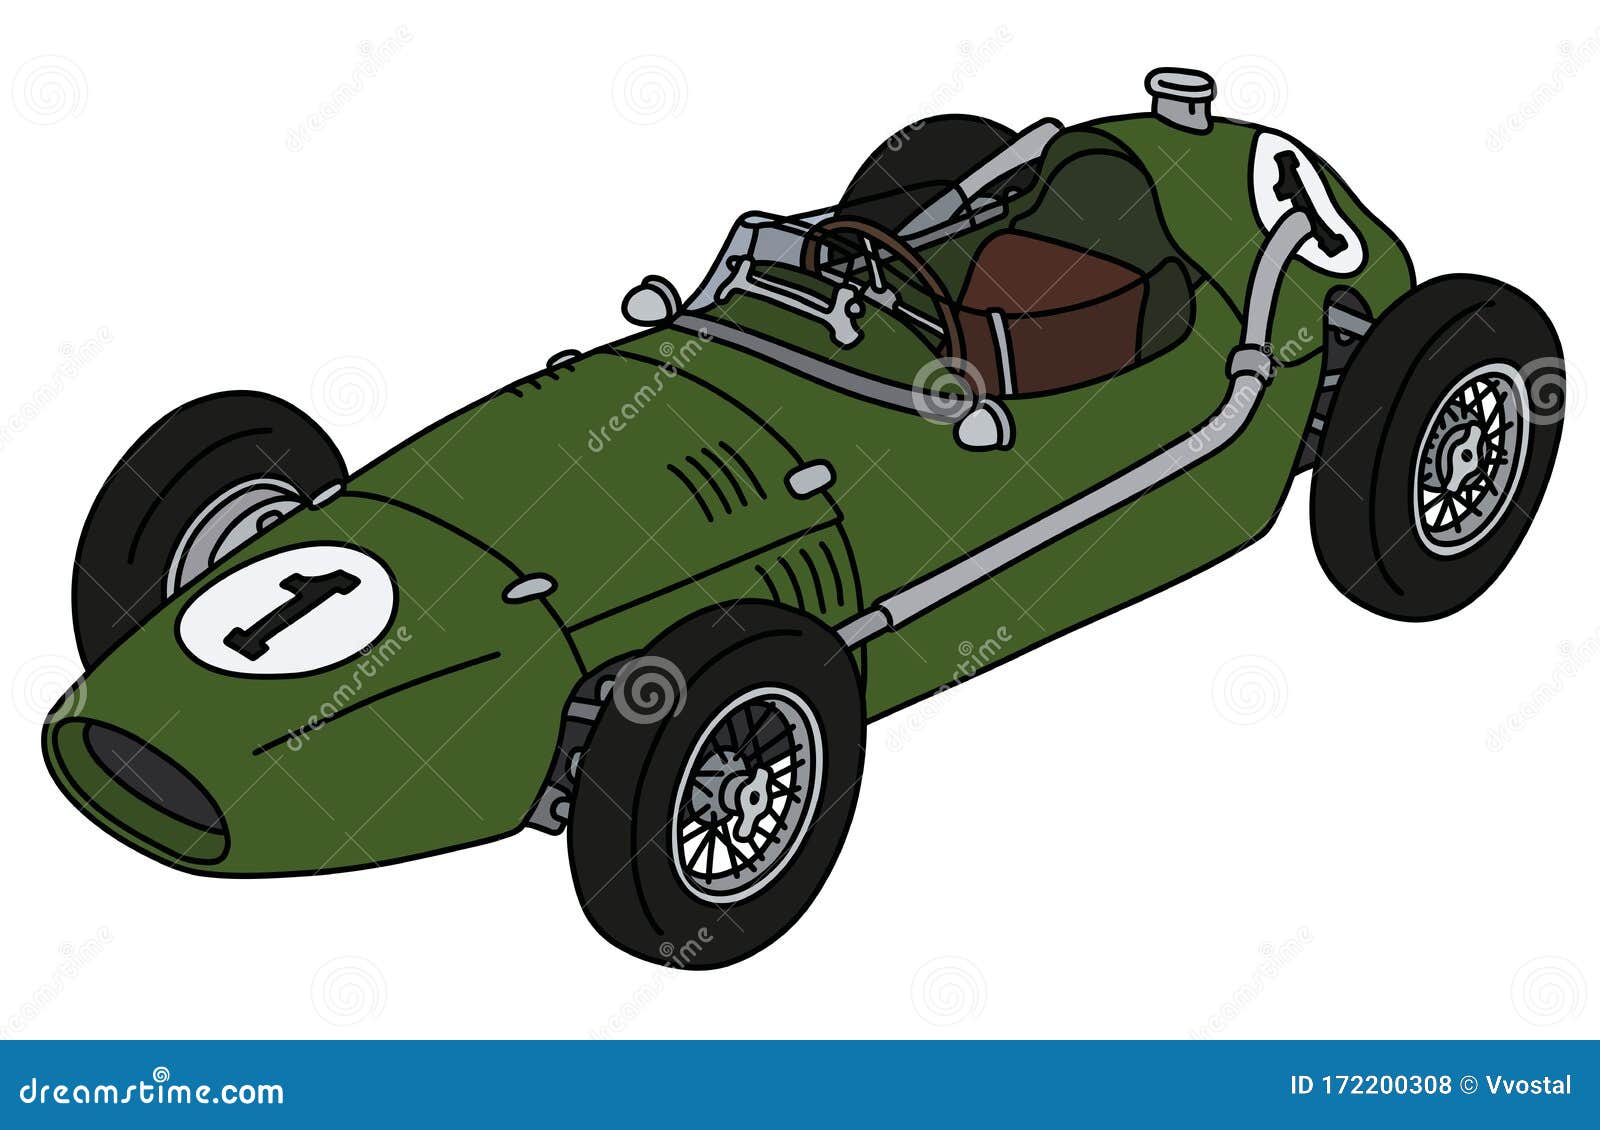 the old green racecar